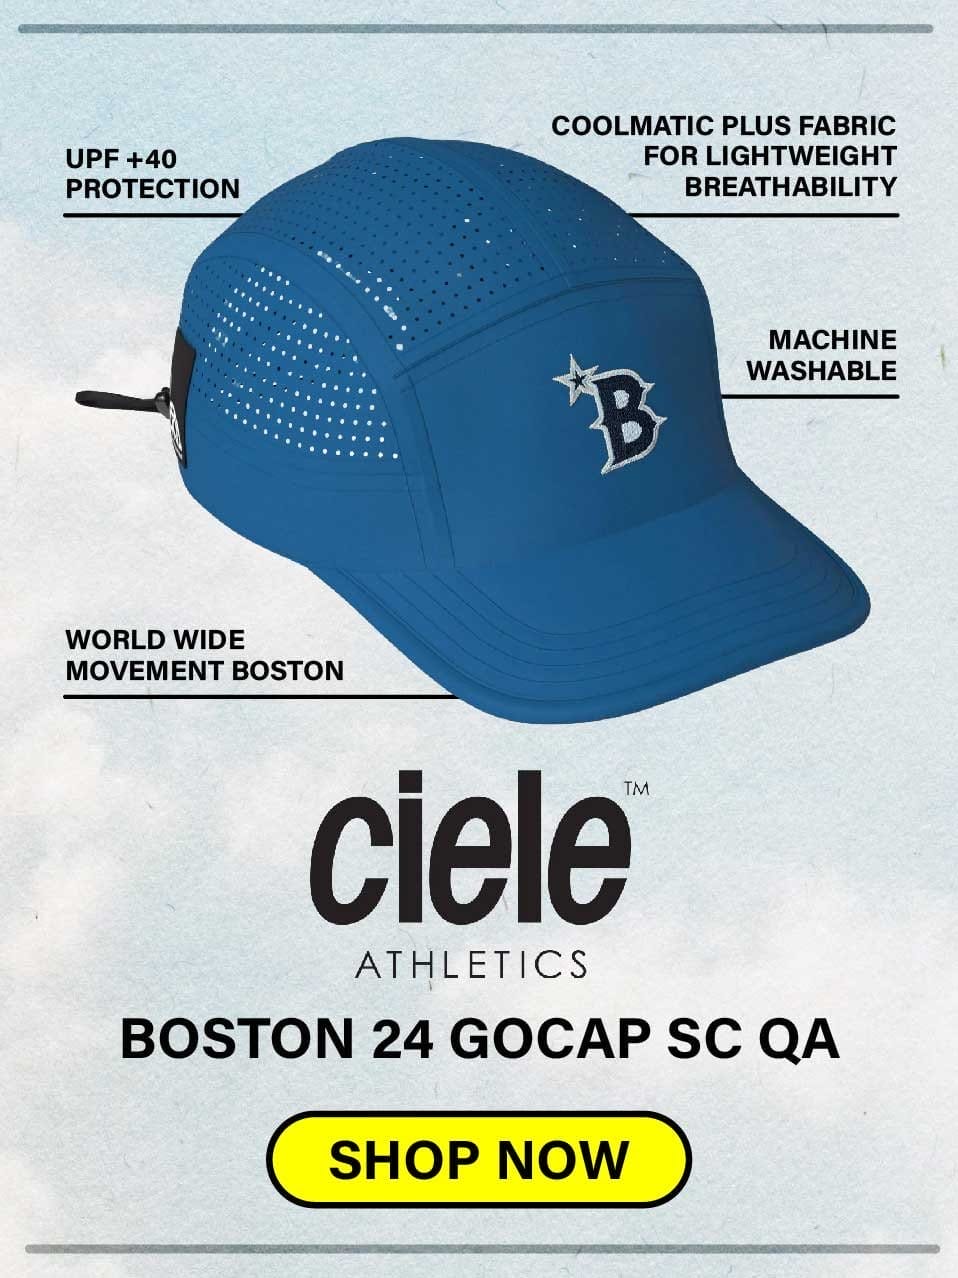 Ciele GOCap SC QA - WWM - Boston 24